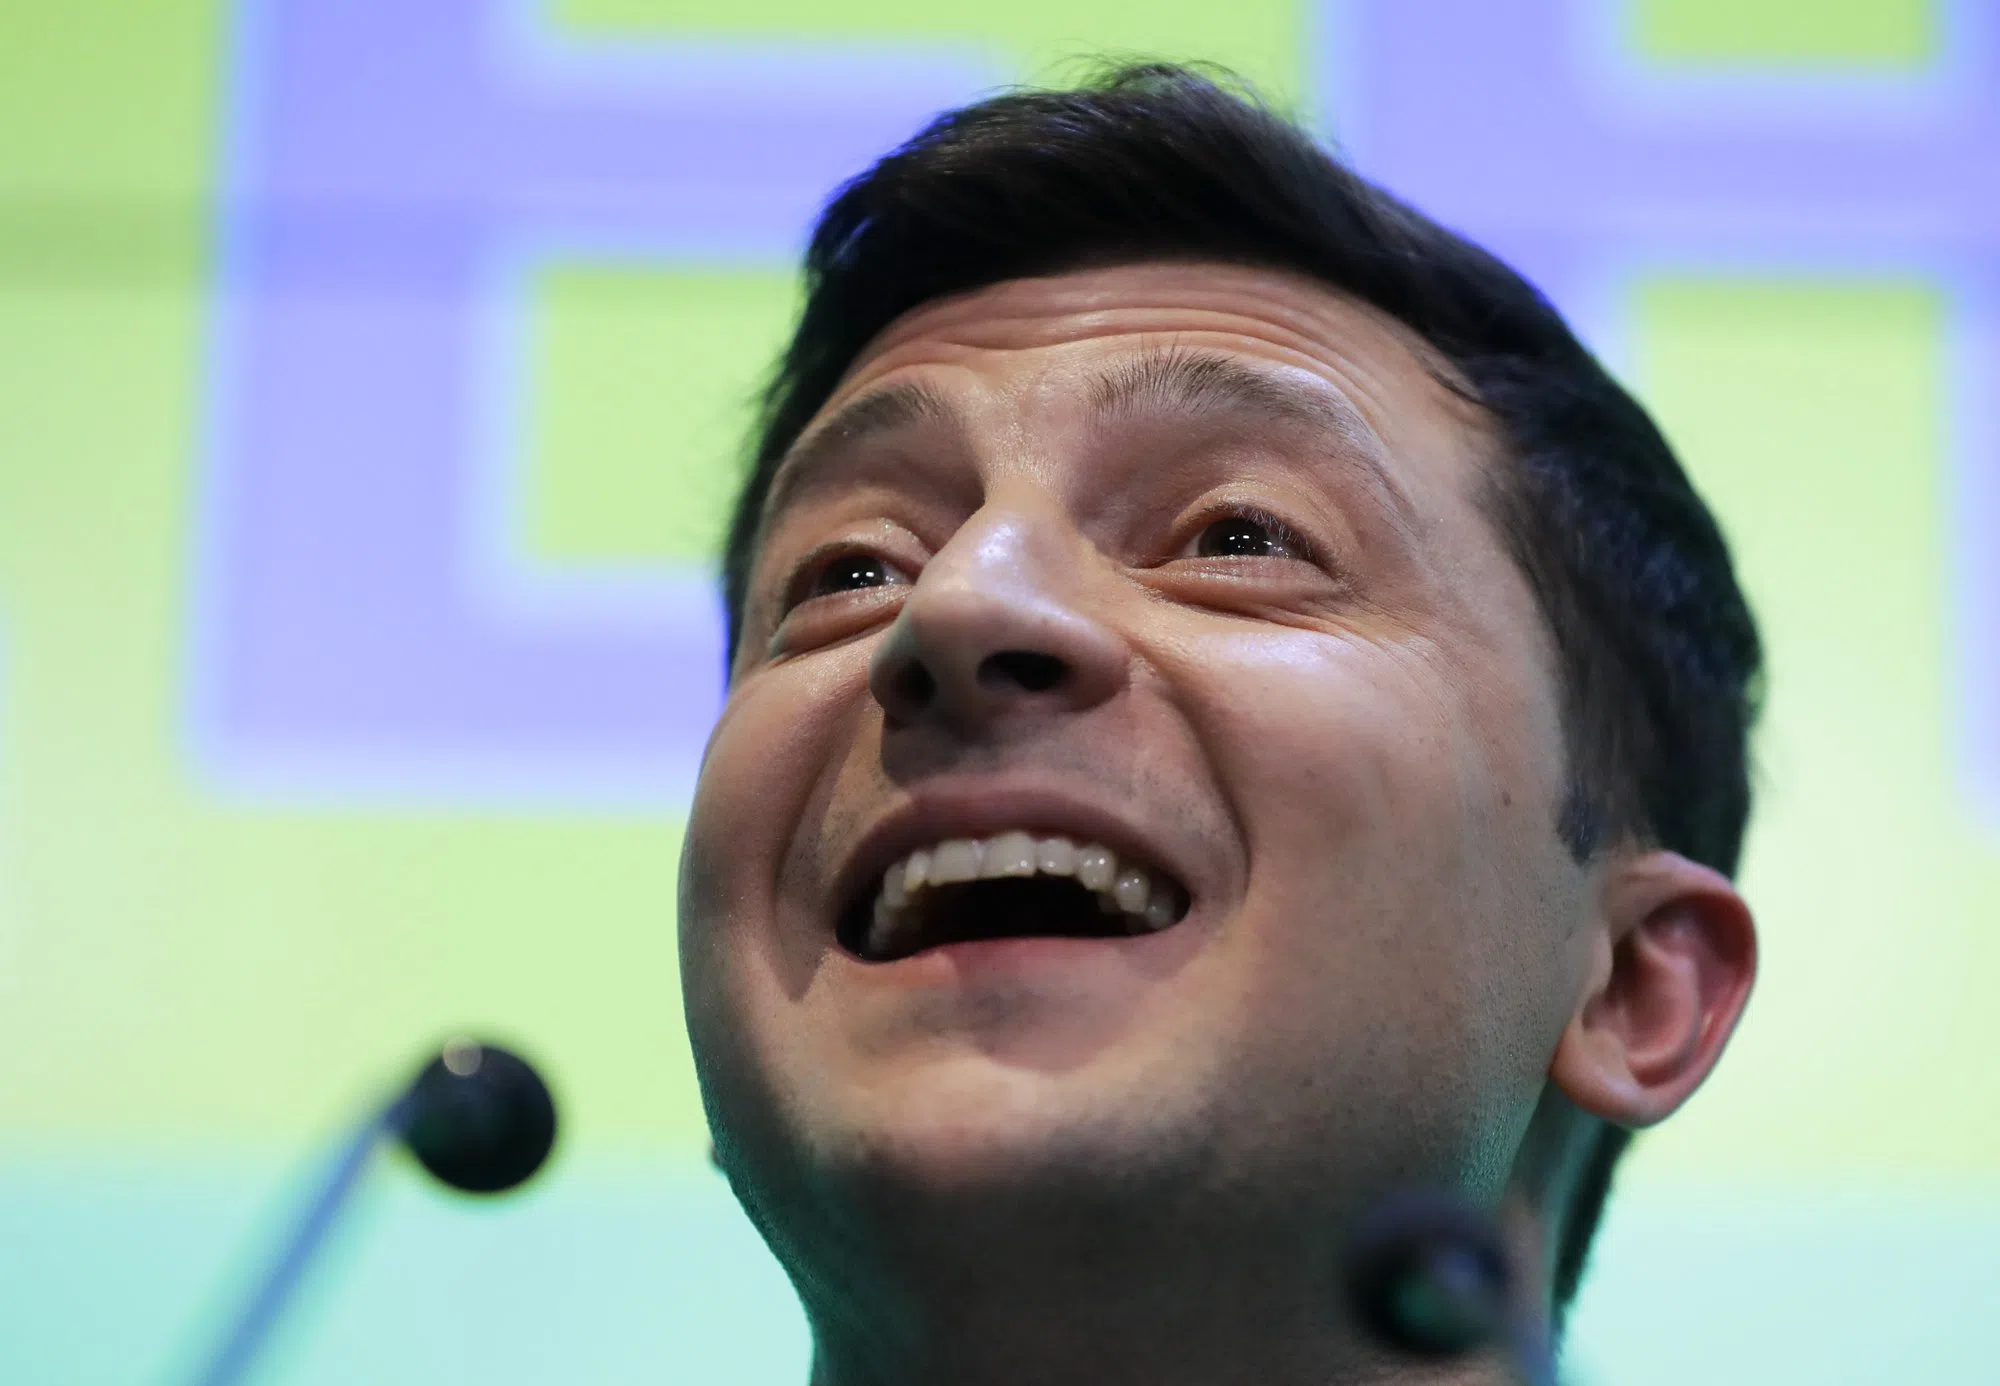 Comedian appears headed for landslide victory in Ukraine